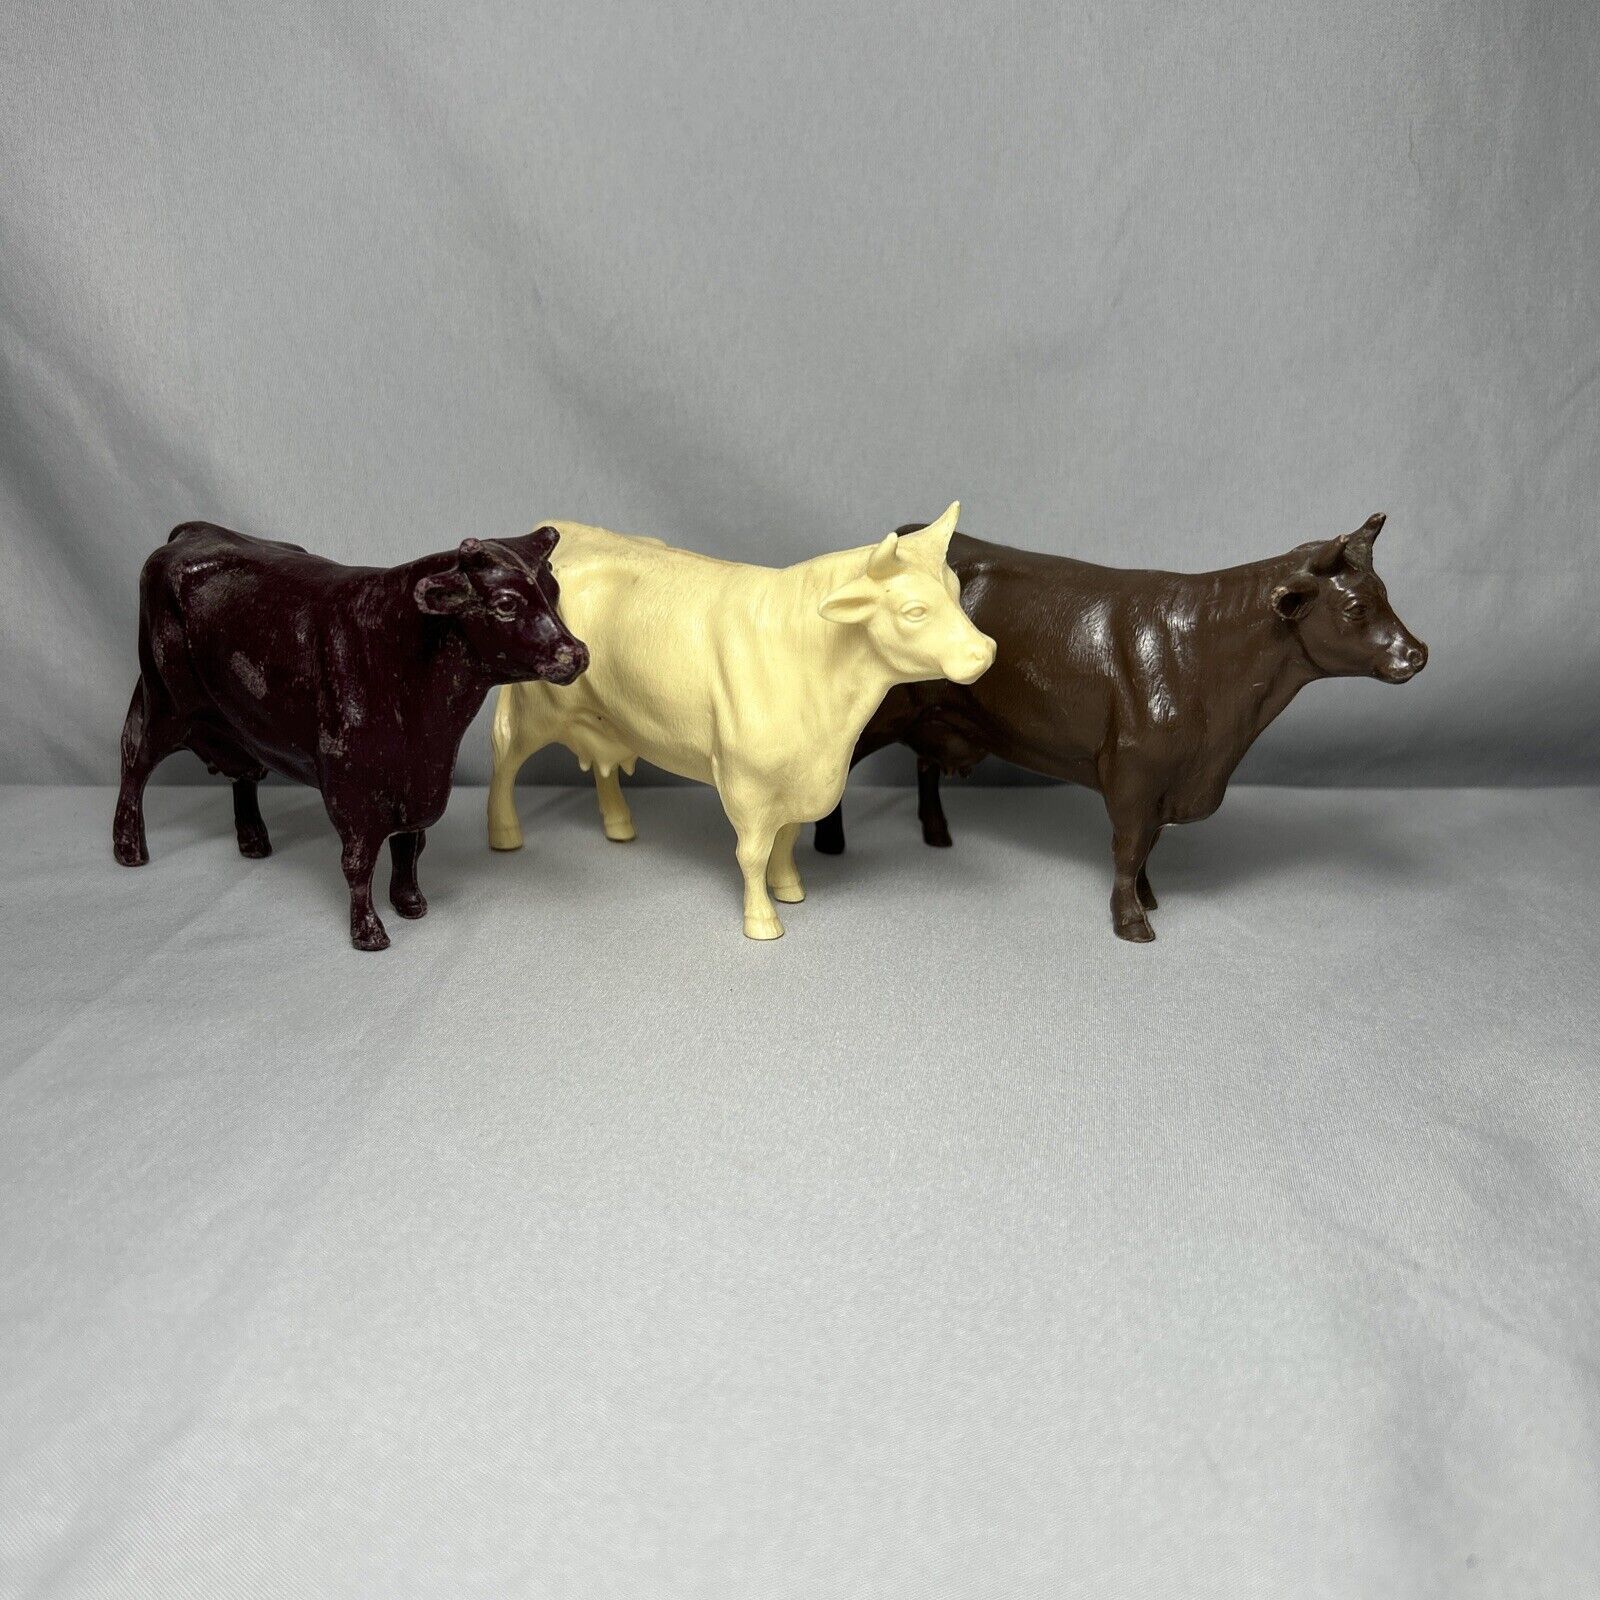 3 Vintage Hartland Plastic Hollow Cows Cattle Red Brown Cream Farm Animals